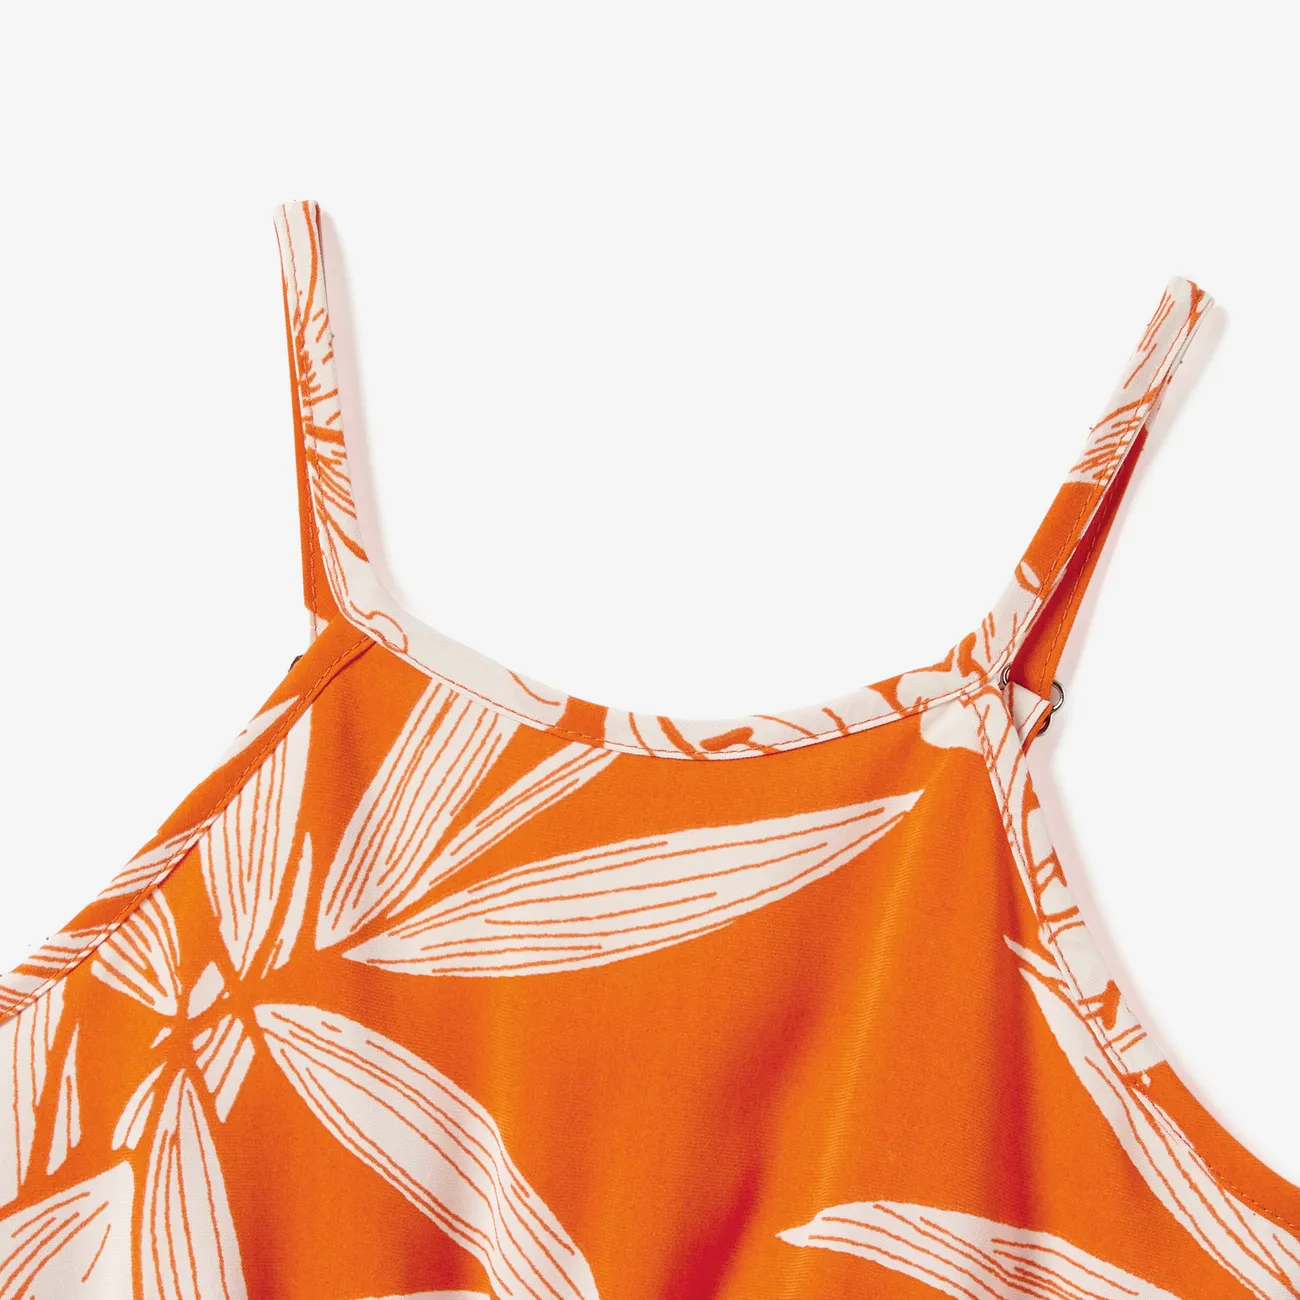 Family Matching Orange Beach Shirt and Floral Strap Dress Sets orangewhite big image 1